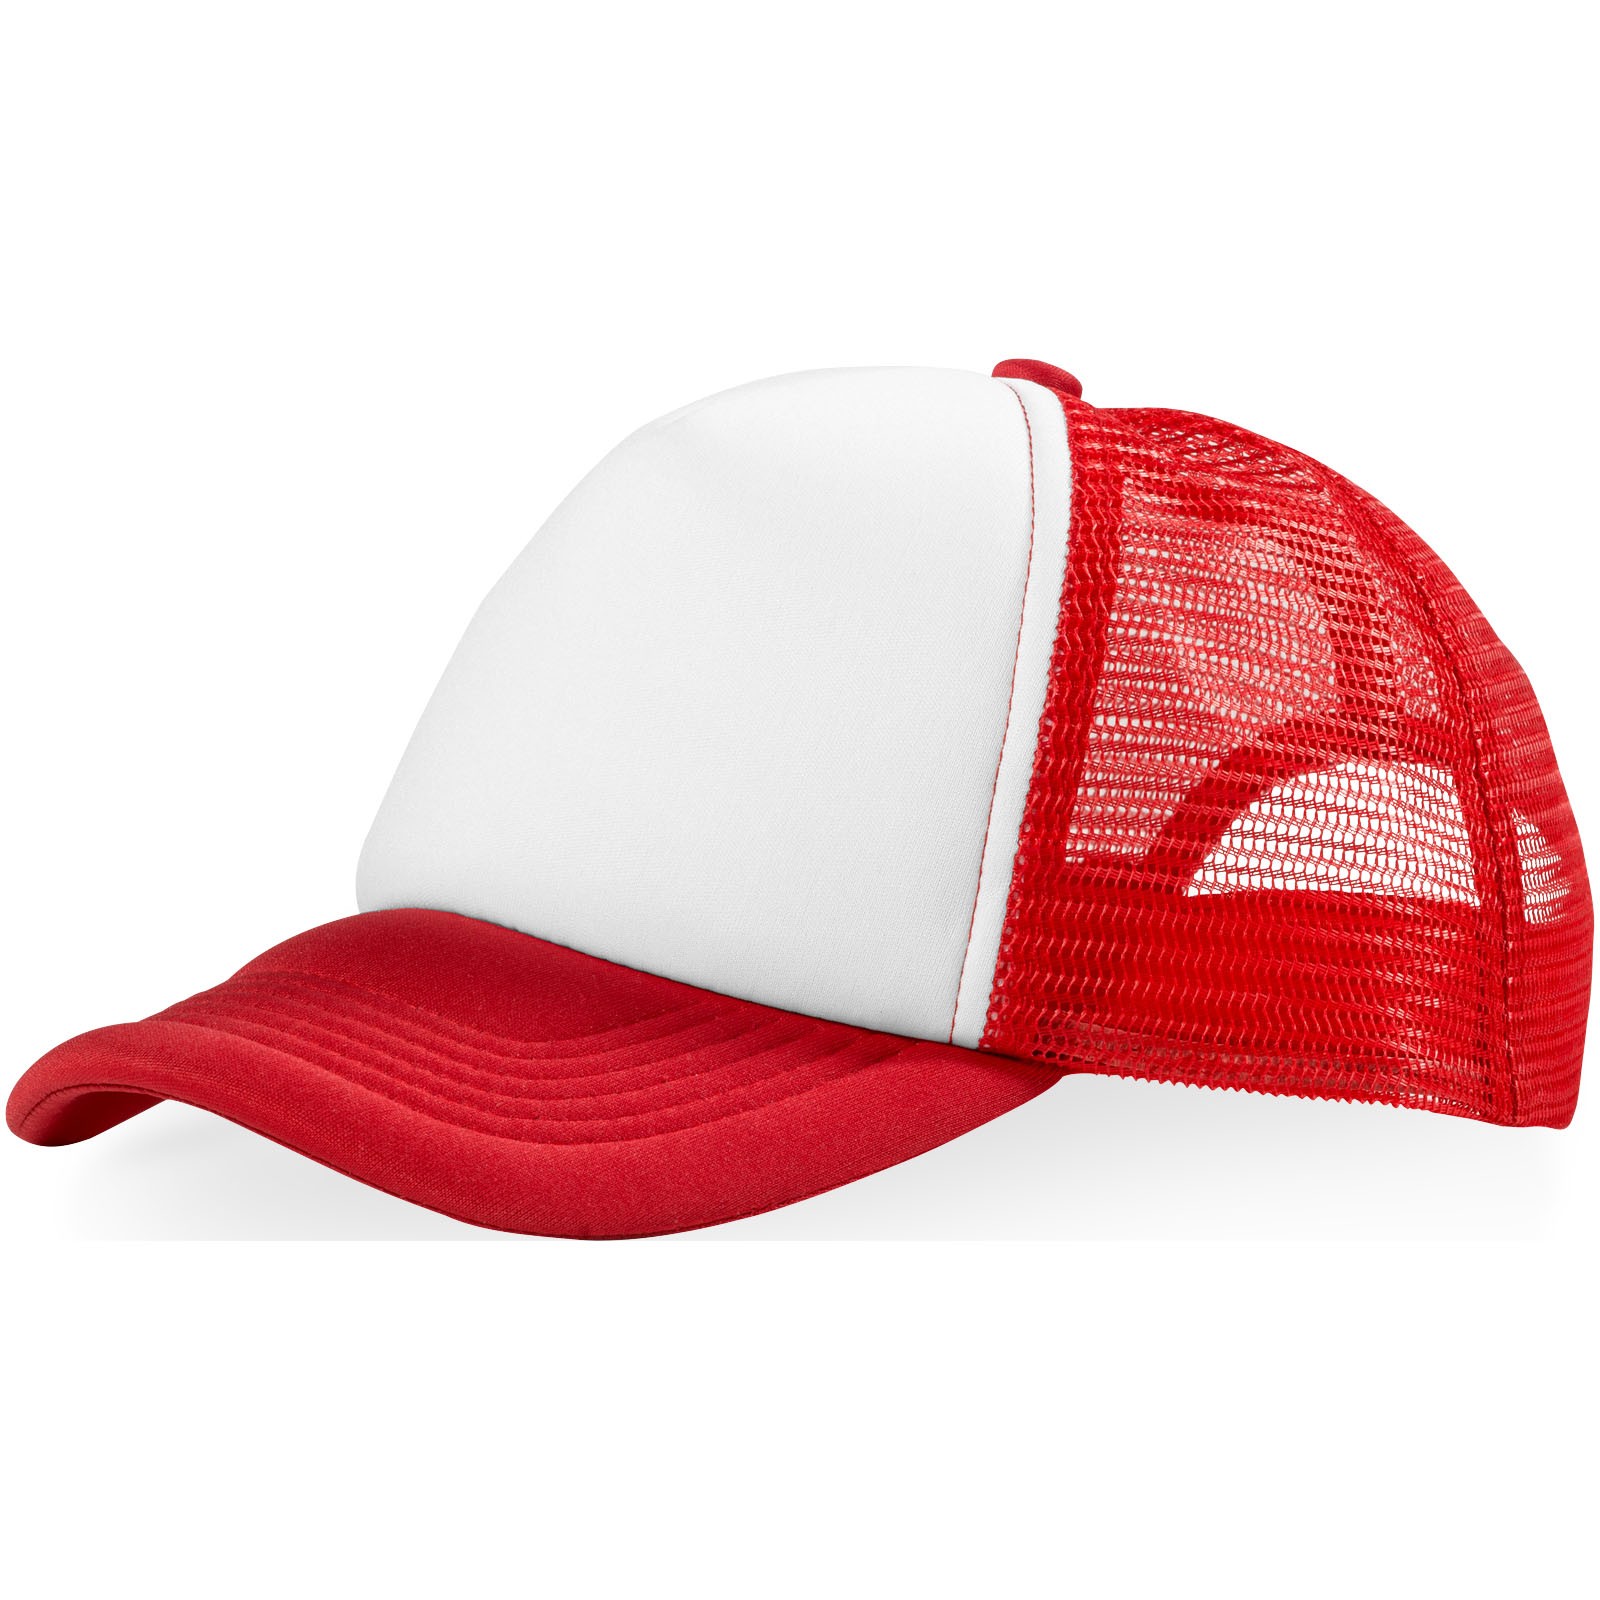 Trucker 5 panel cap - Red / White